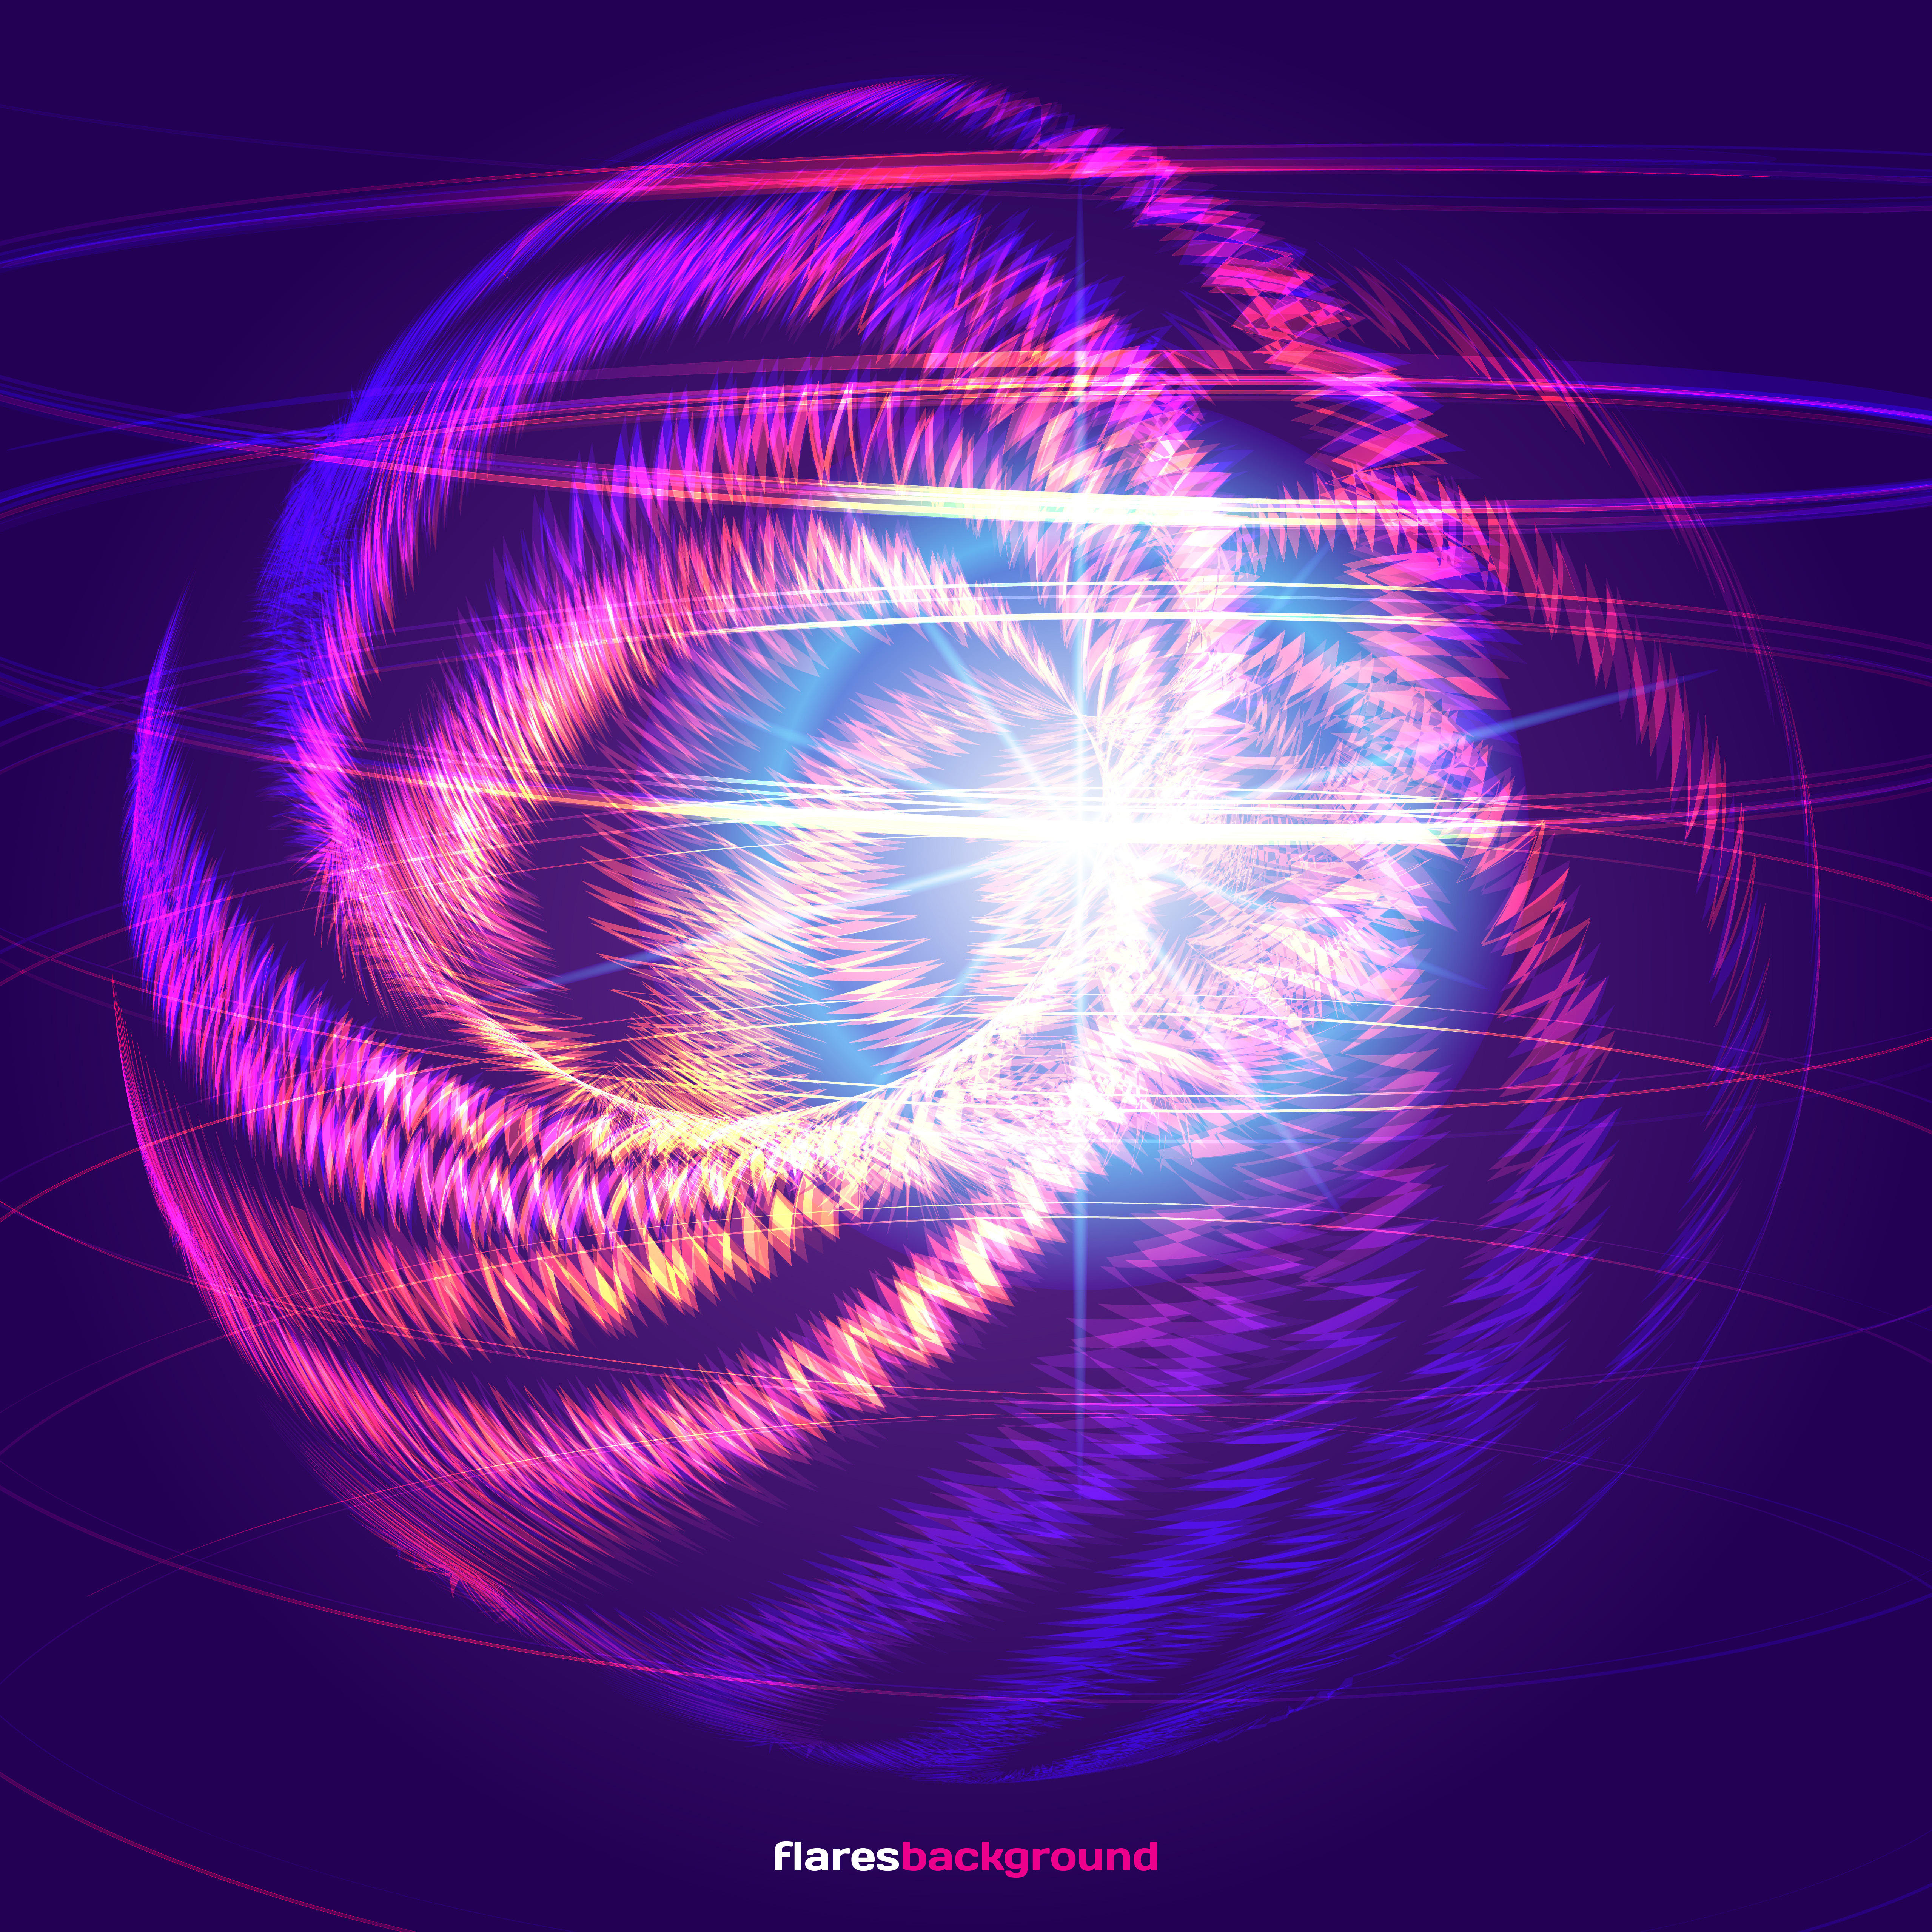 Flares background sphere - free photo